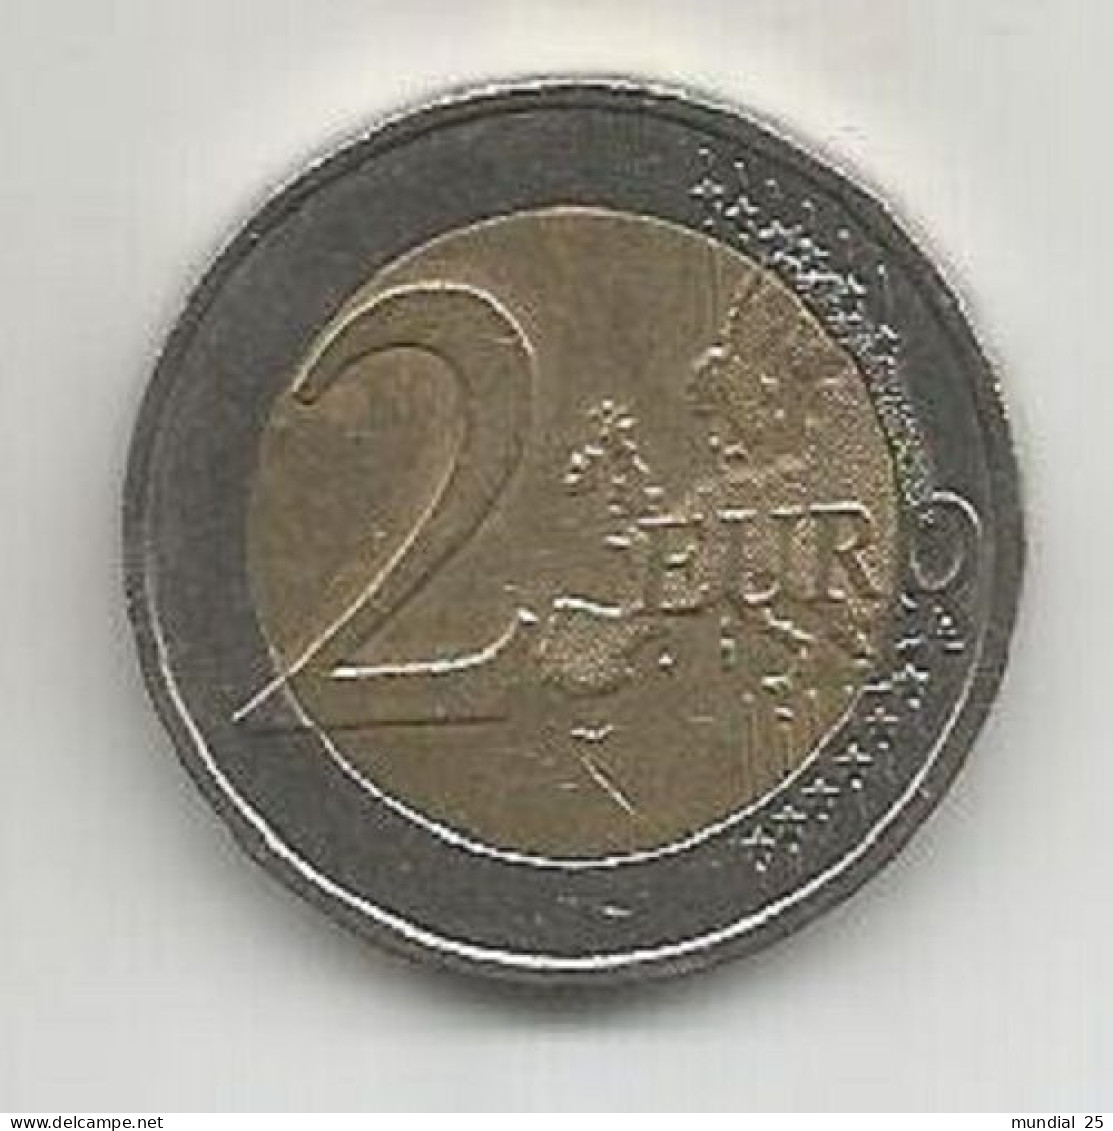 FRANCE 2 EURO 2012 - EURO COINAGE, 10th ANNIVERSARY - Frankreich